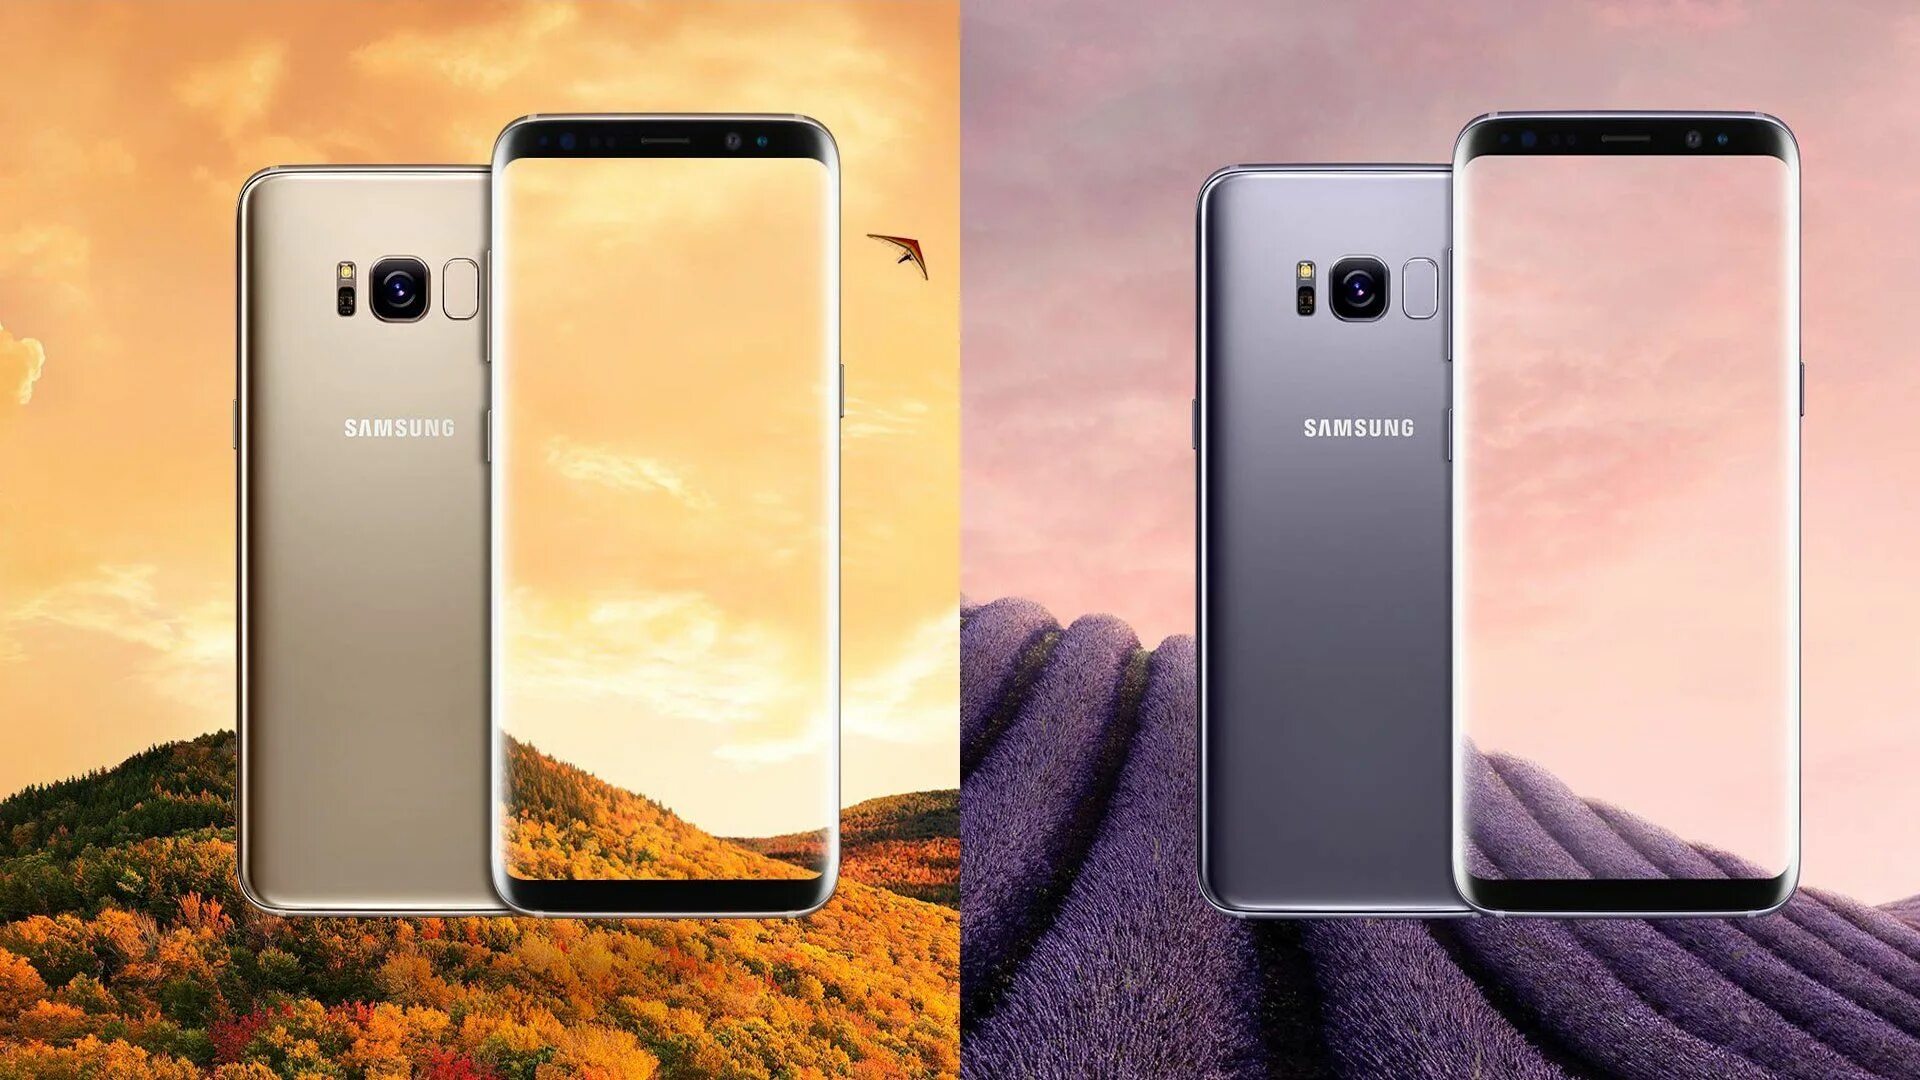 Samsung Galaxy s8. Самсунг галакси с 8. Samsung Galaxy s8 2017. Samsung Galaxy s8 Plus Gold. 6 samsung galaxy s9